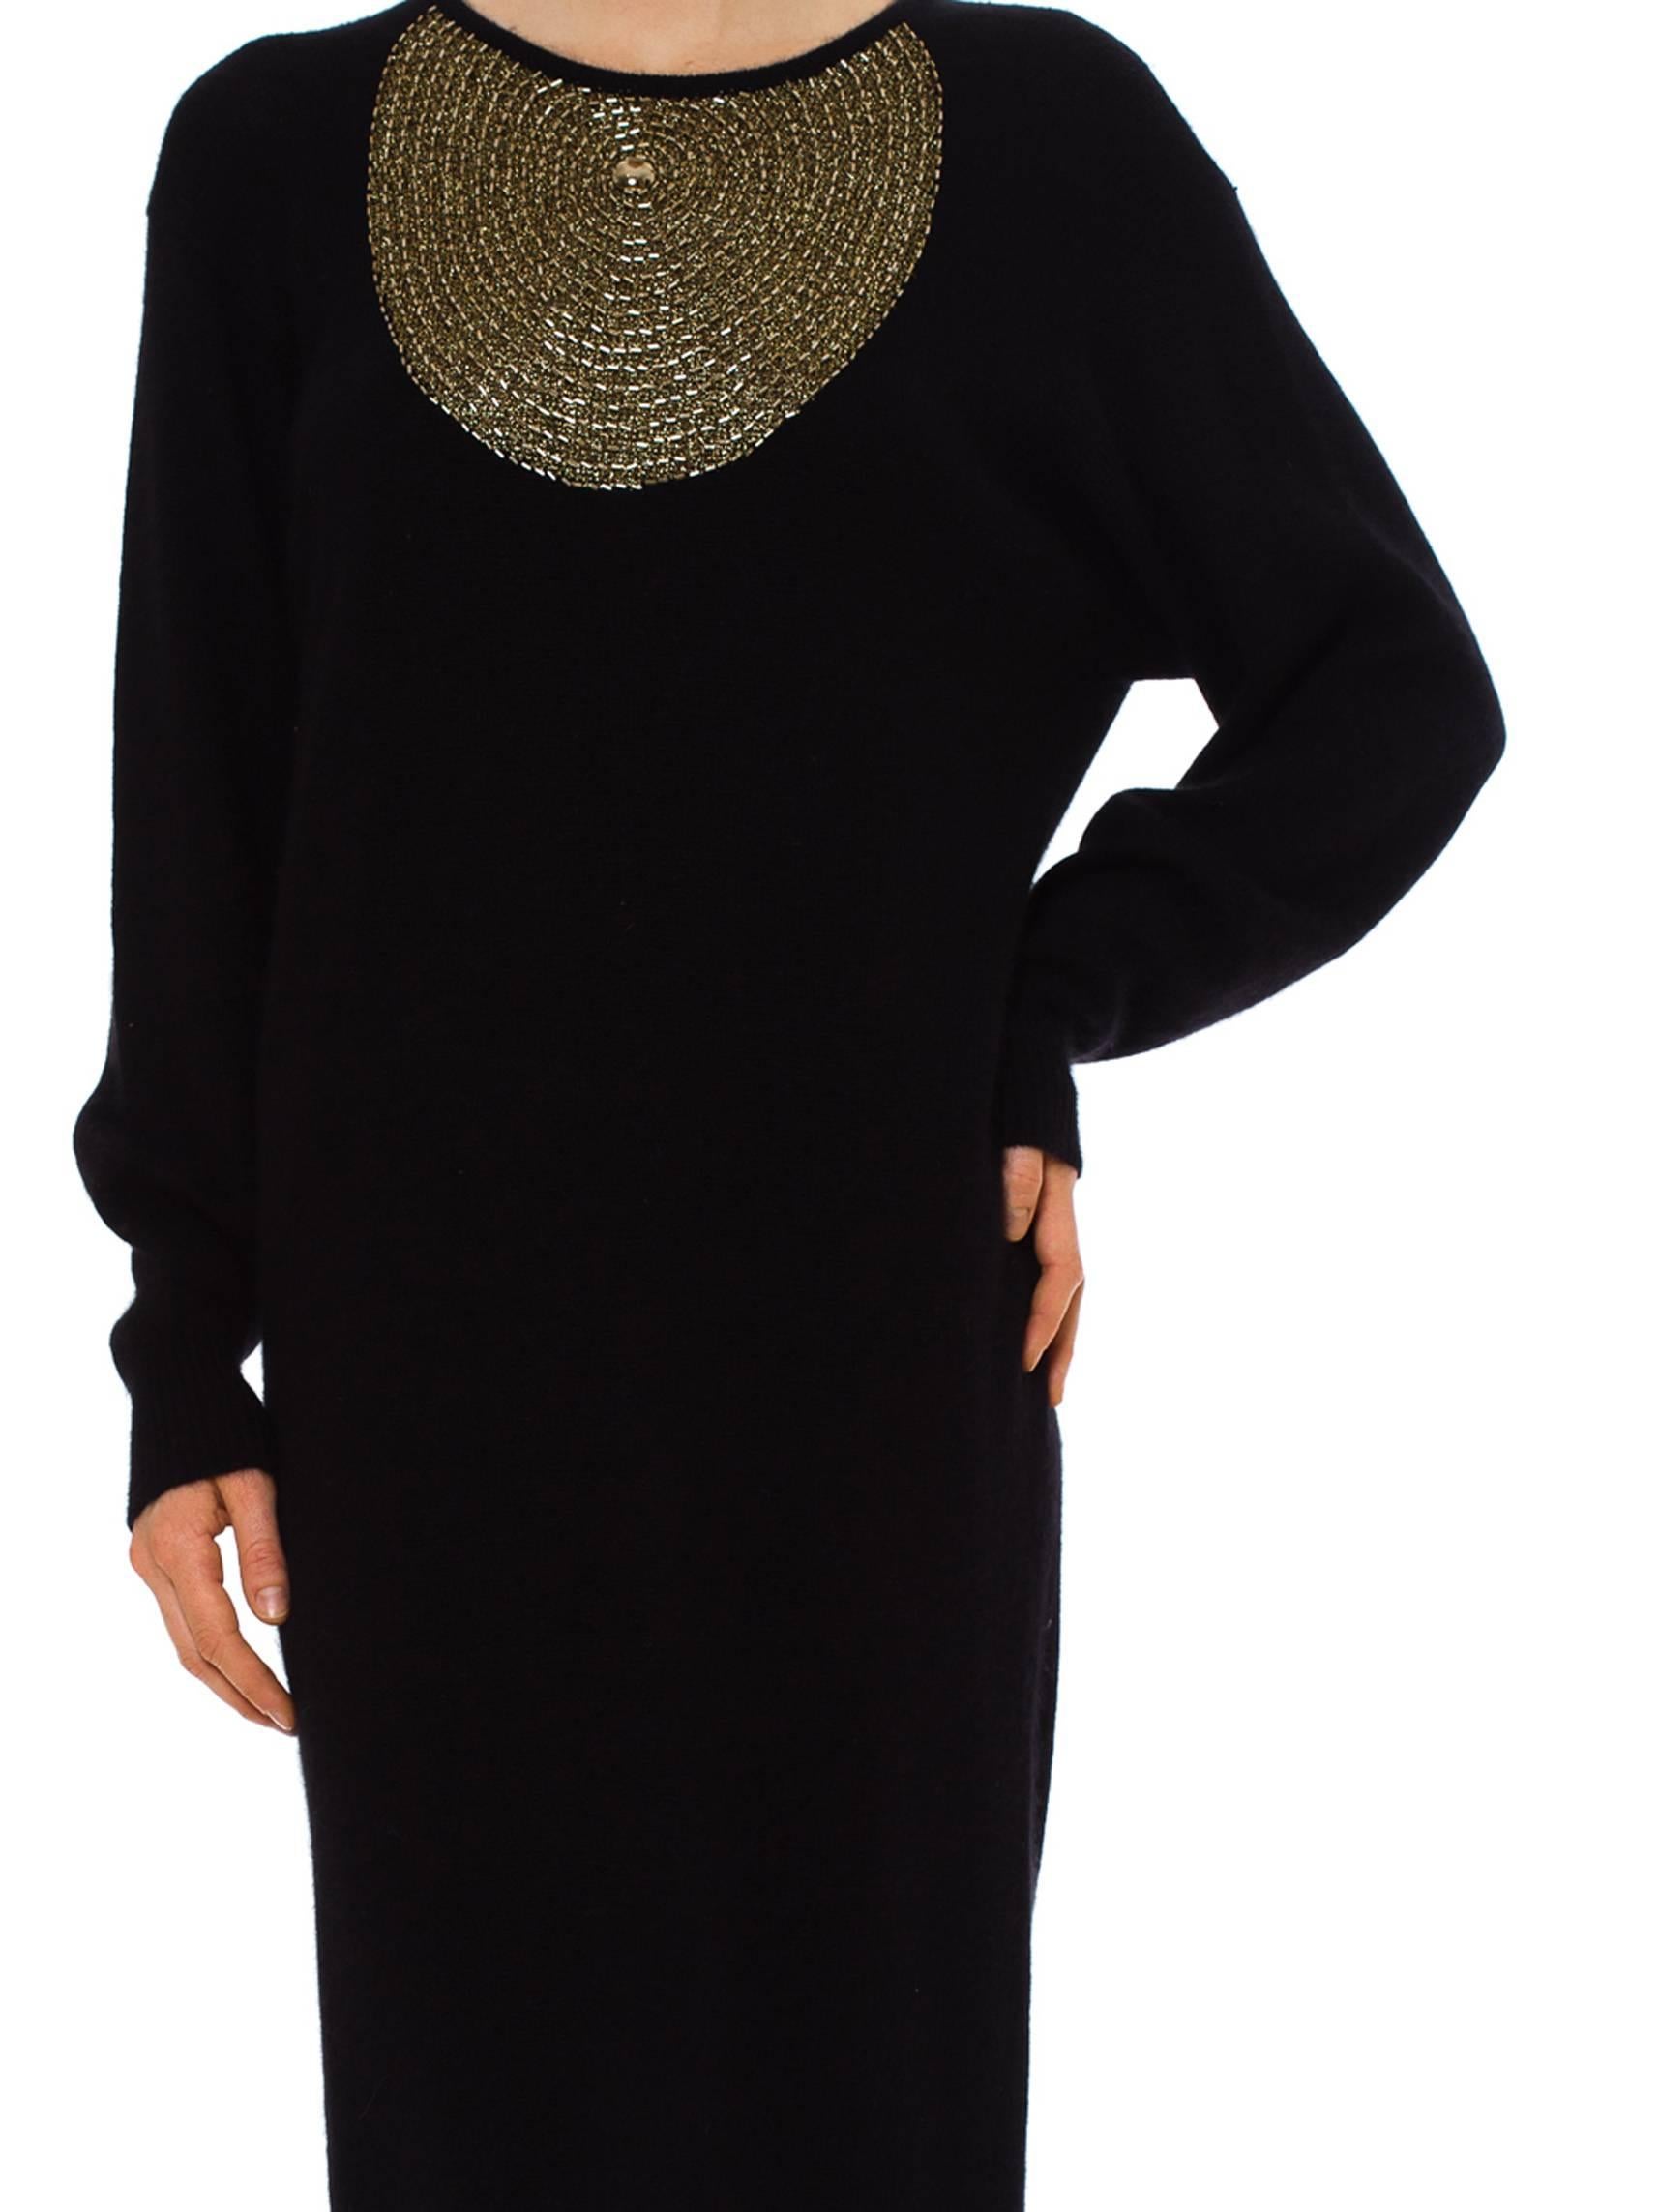 Women's 1990S KRIZIA Black Angora & Wool Knit Sweater Dress With Gold Beadwork For Sale